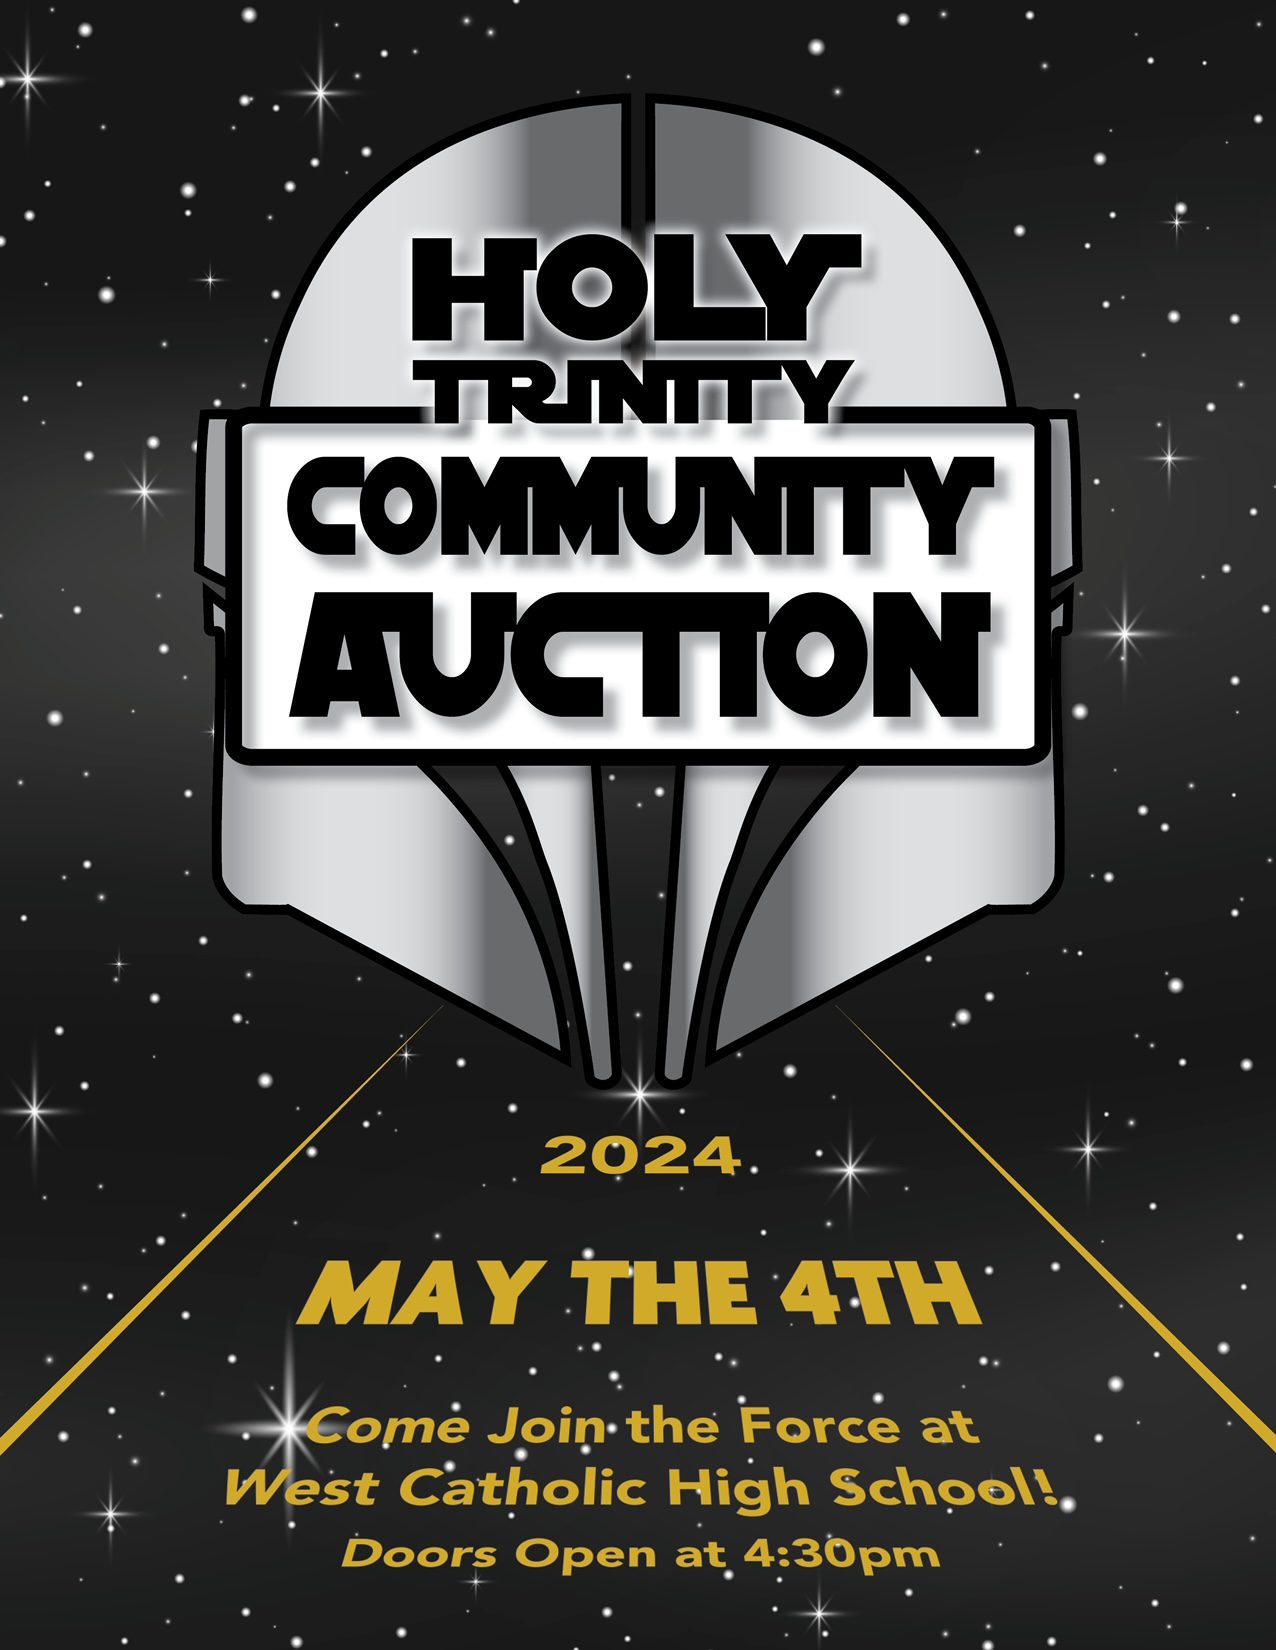 Holy Trinity Community Auction